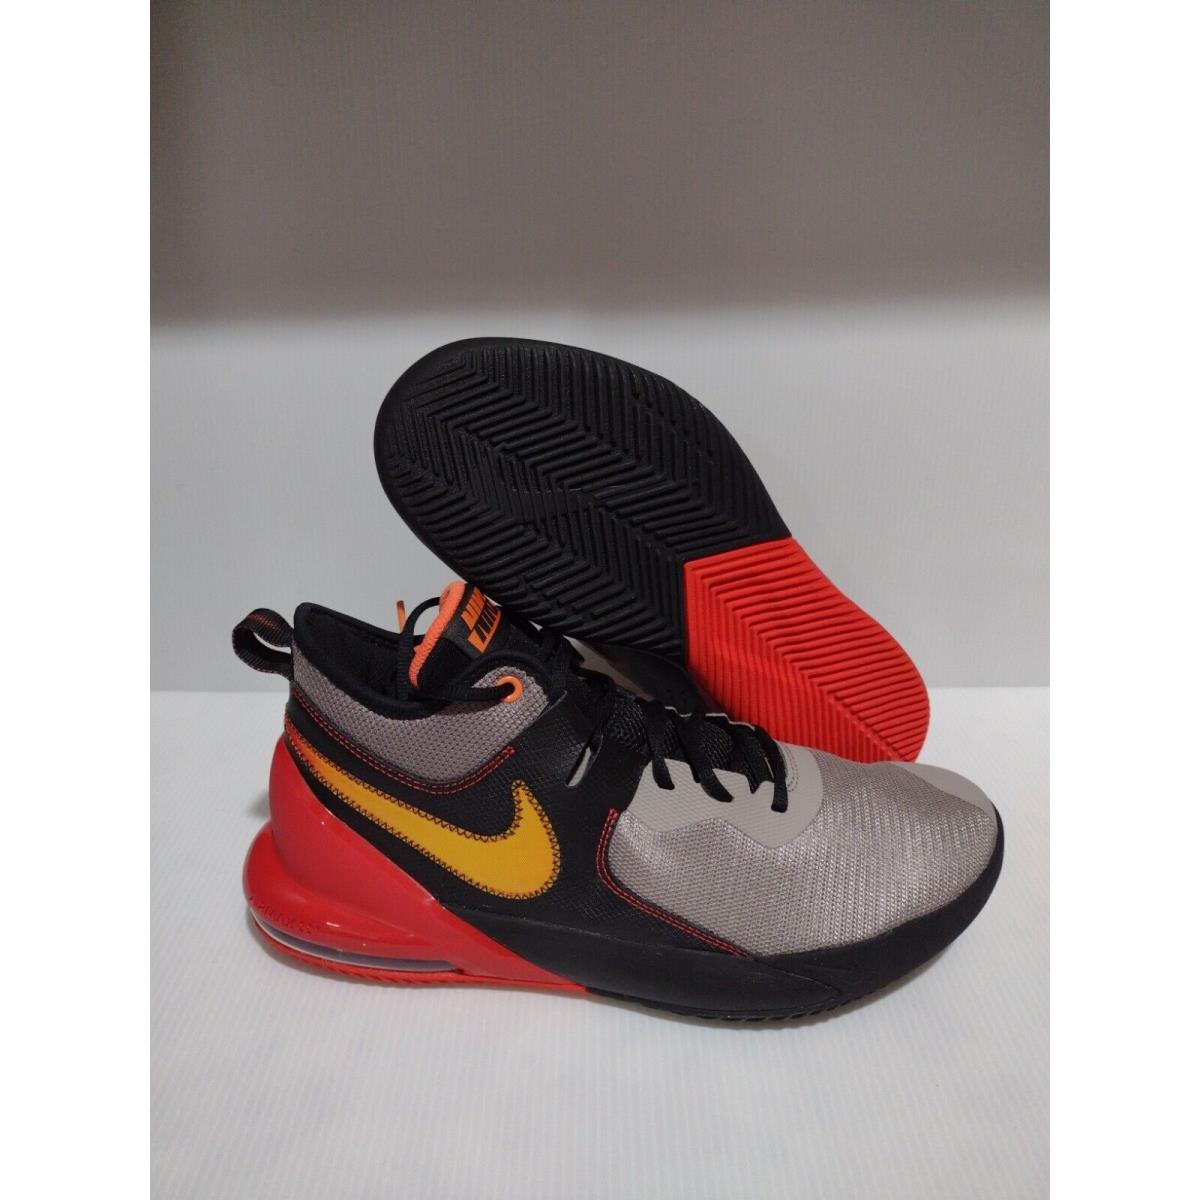 Nike Air Max Impact Basketball Shoes Size 11.5 us Men